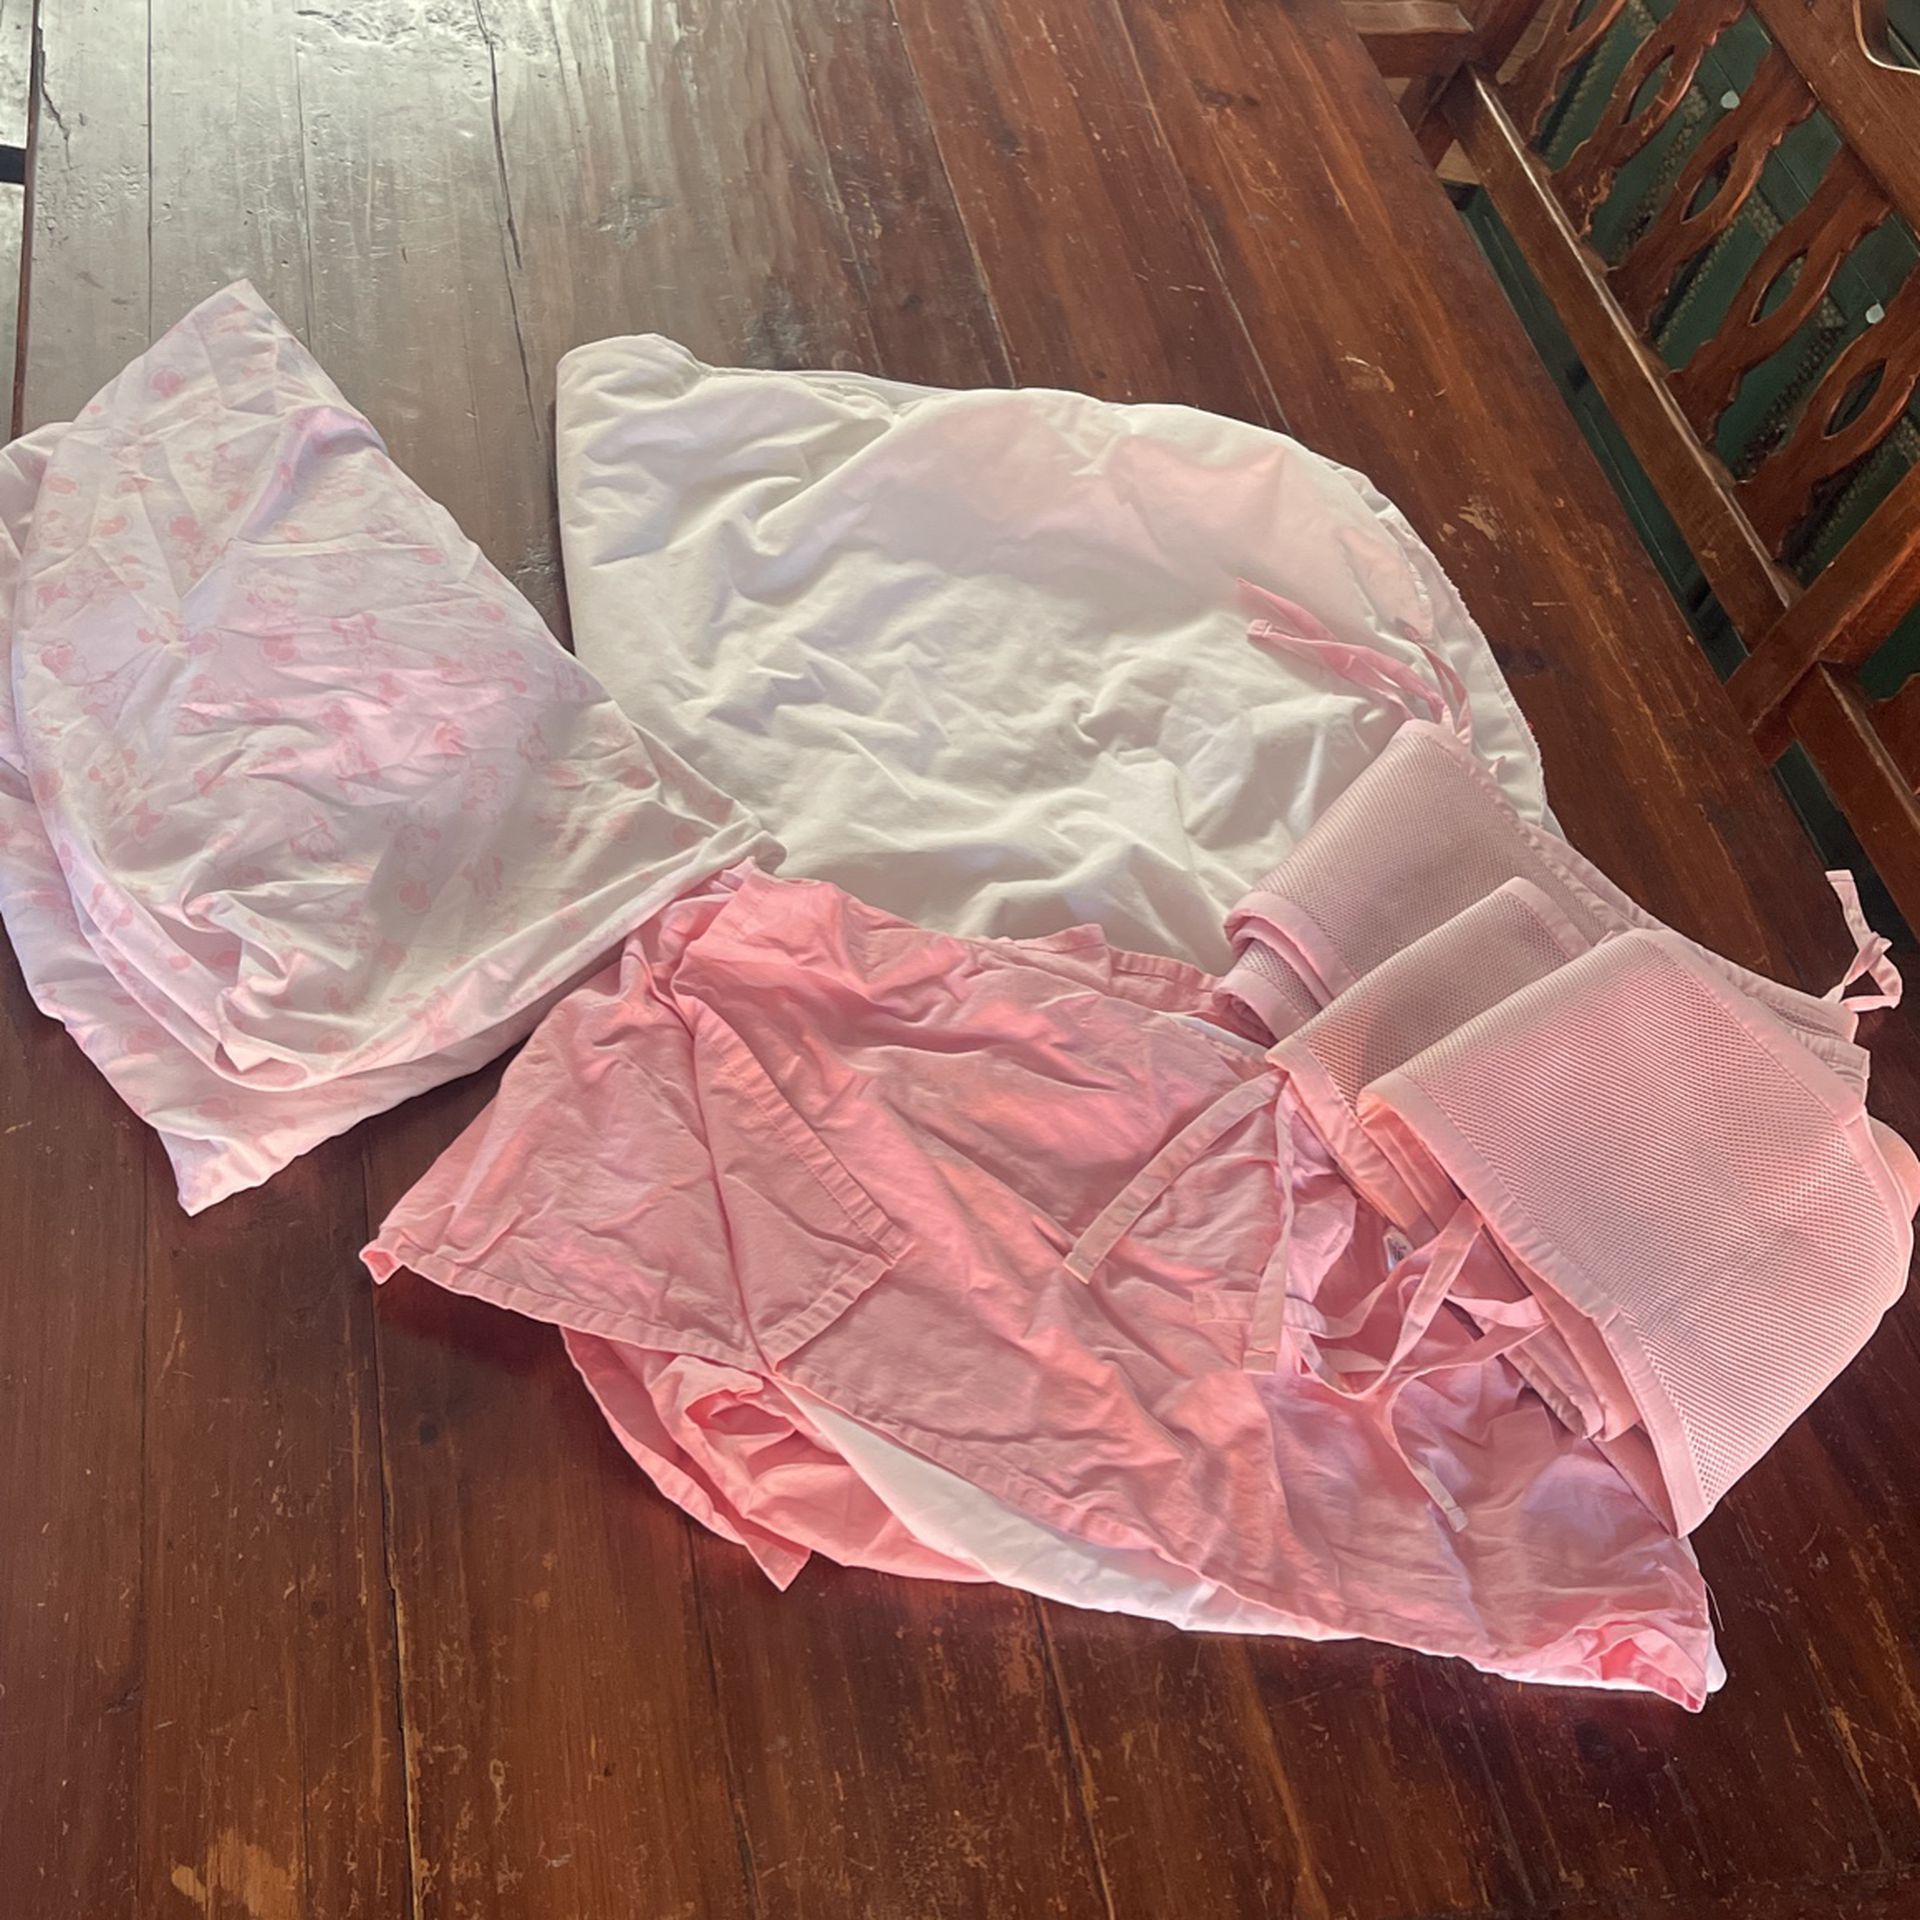 Crib Sheet, Mattress Pad, Bed Skirt And Mesh Bumper